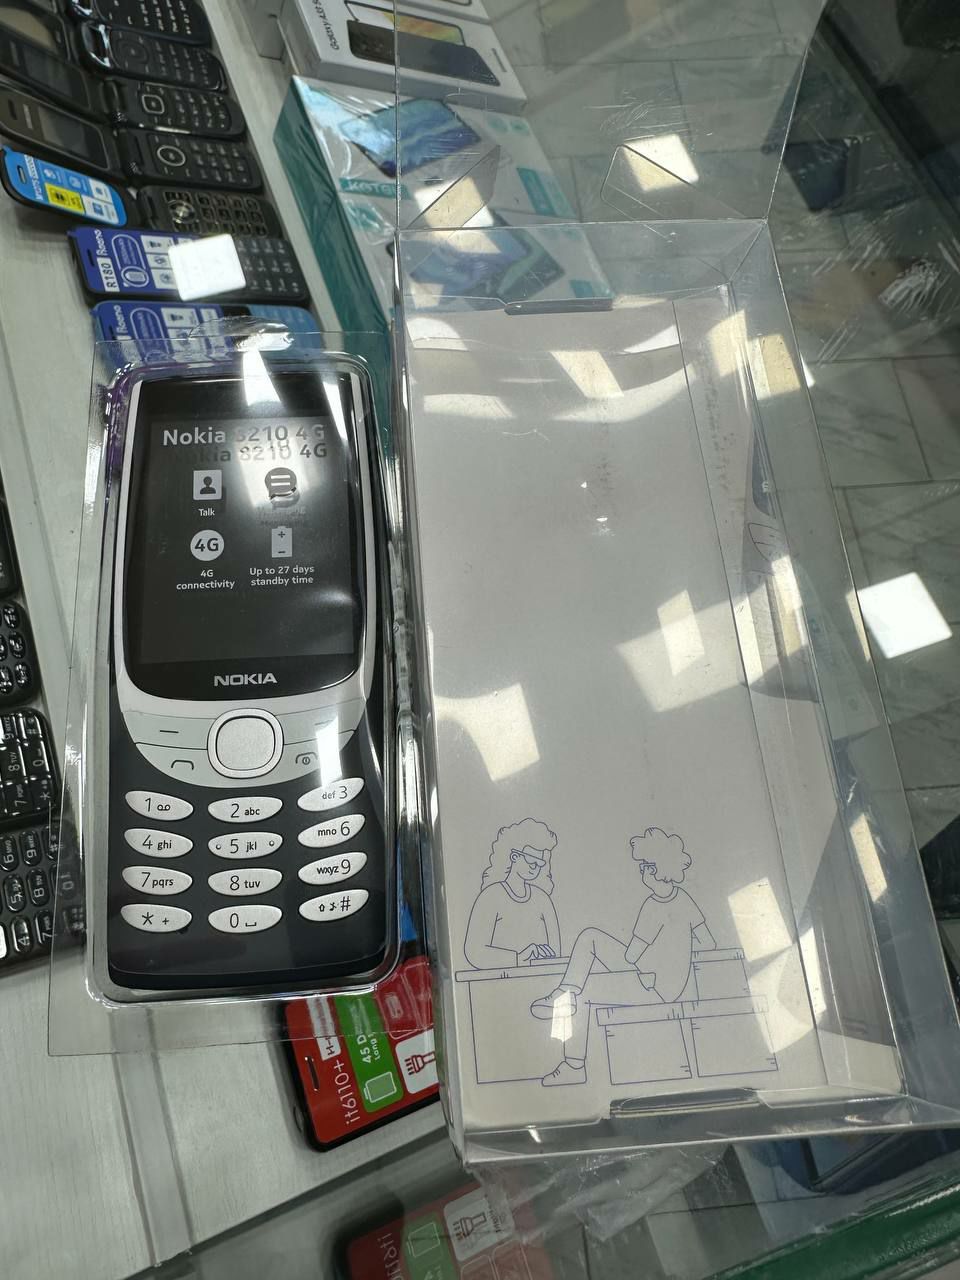 Nokia 8210, Gsm,Dostavka,Garantiya,Mutloqo yengi tella,(Новый).